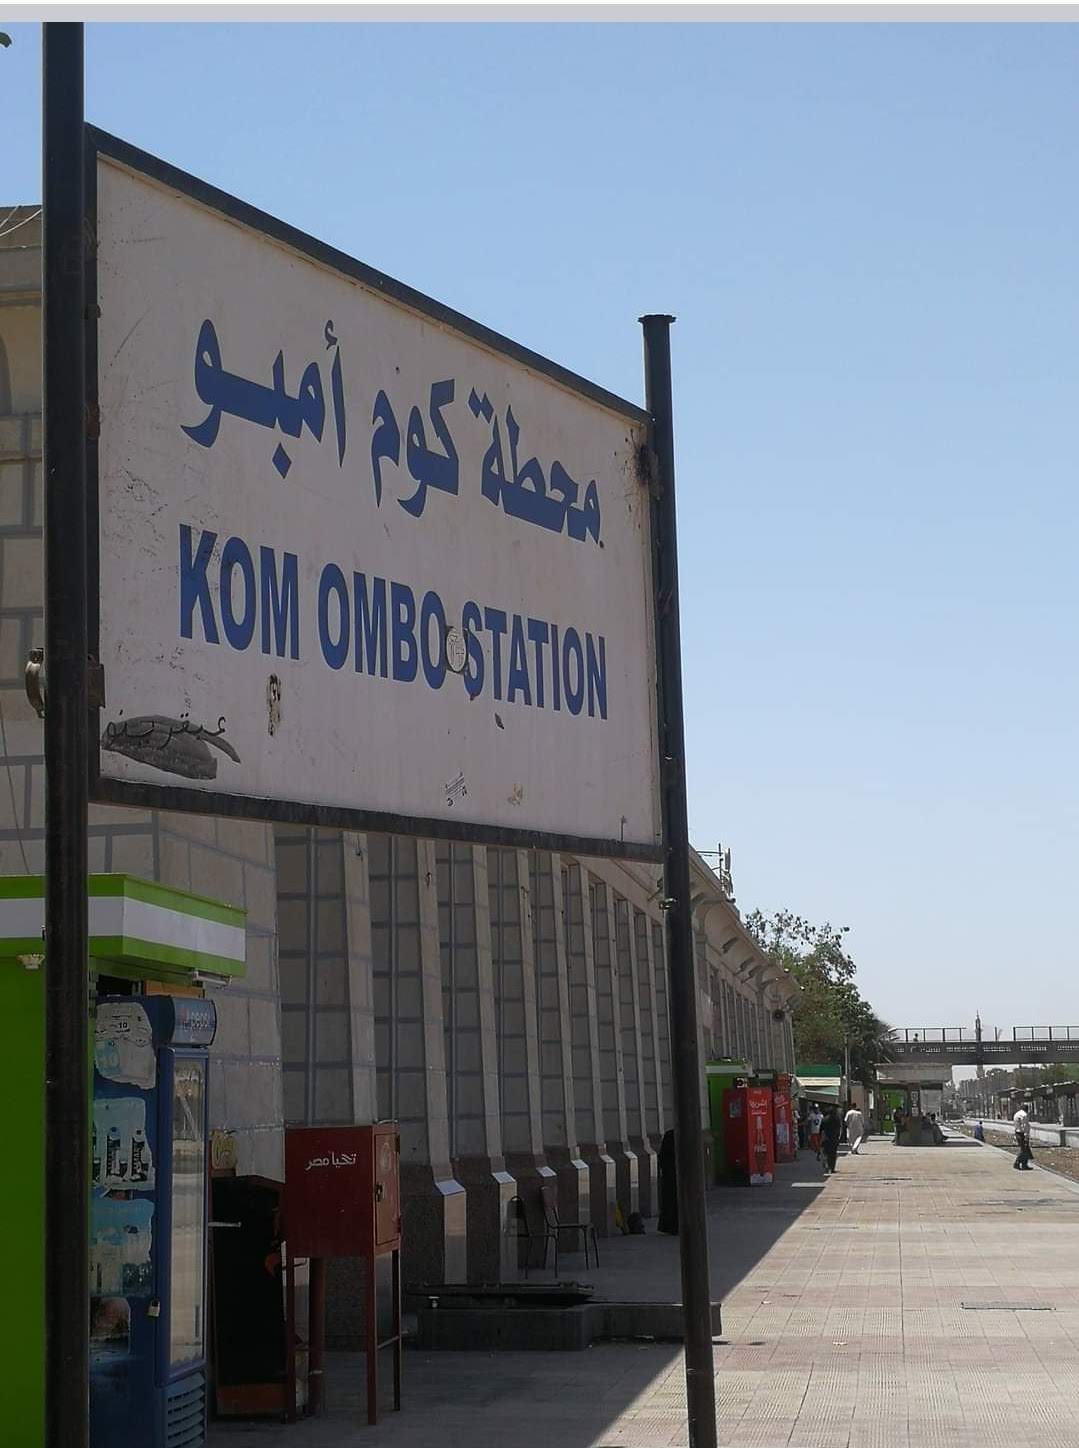 Train station Kom Ombo